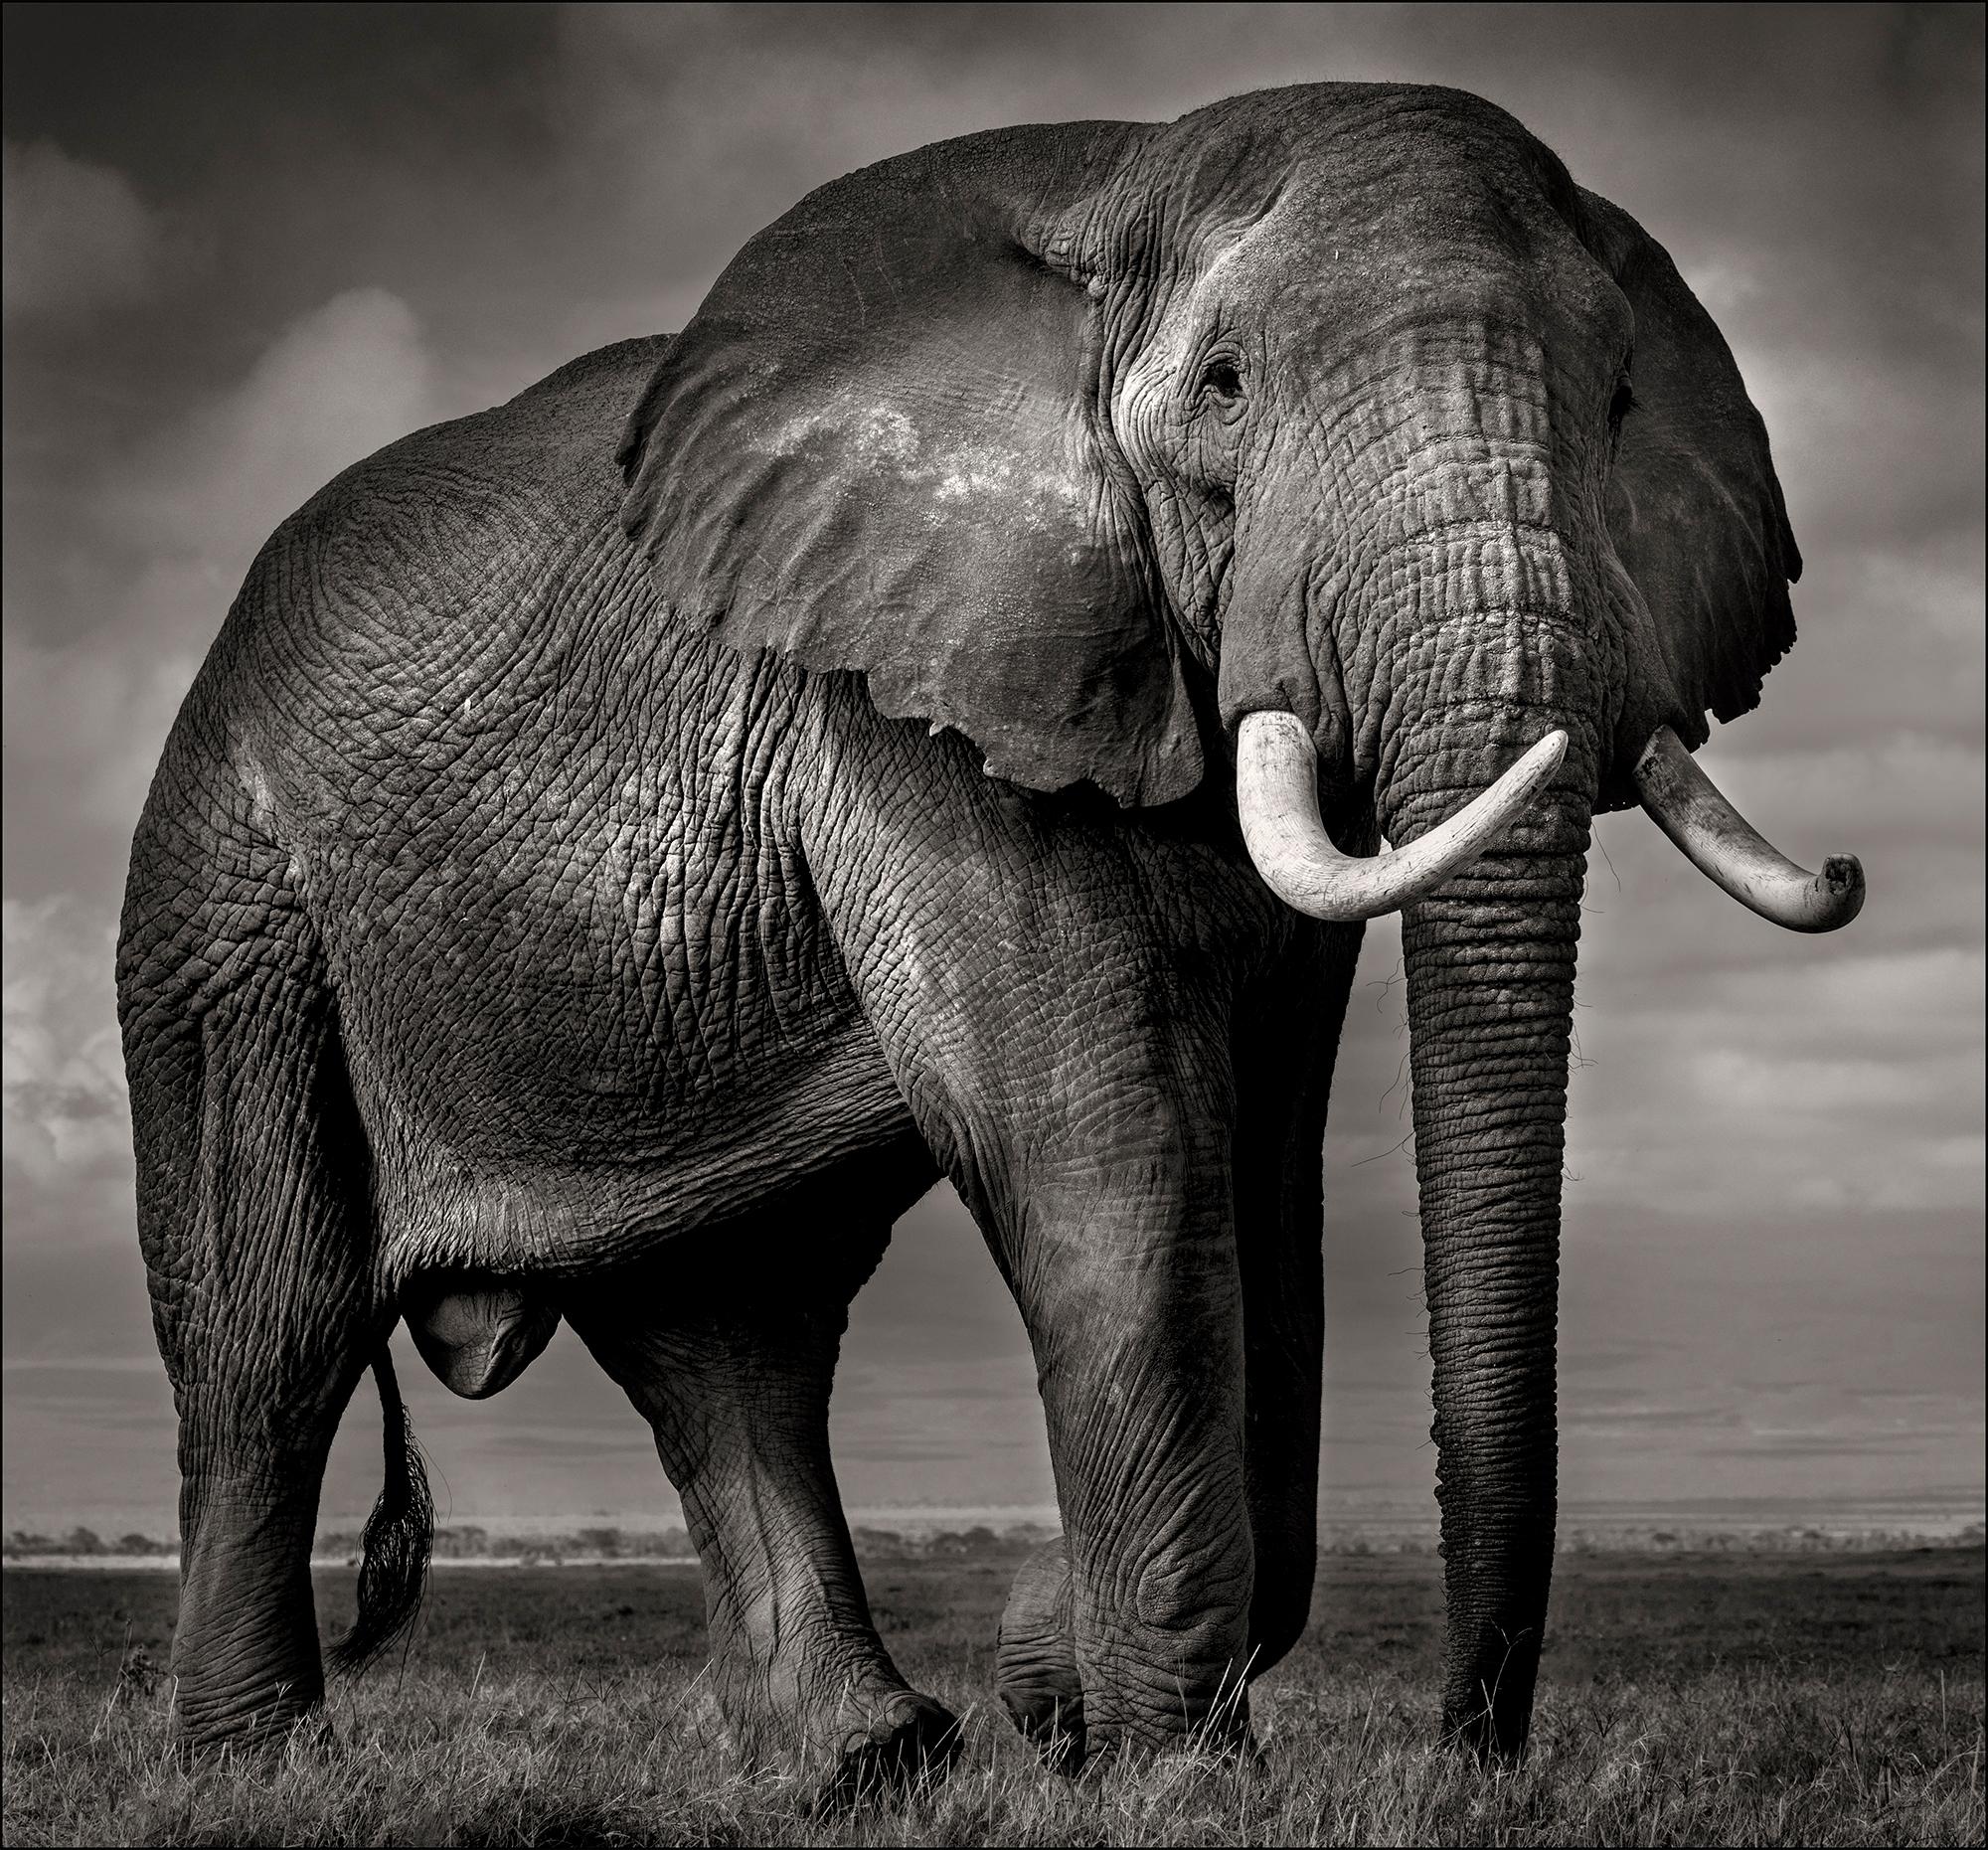 Joachim Schmeisser Landscape Photograph - Elephant bull in Amboseli, animal, wildlife, black and white photography, africa